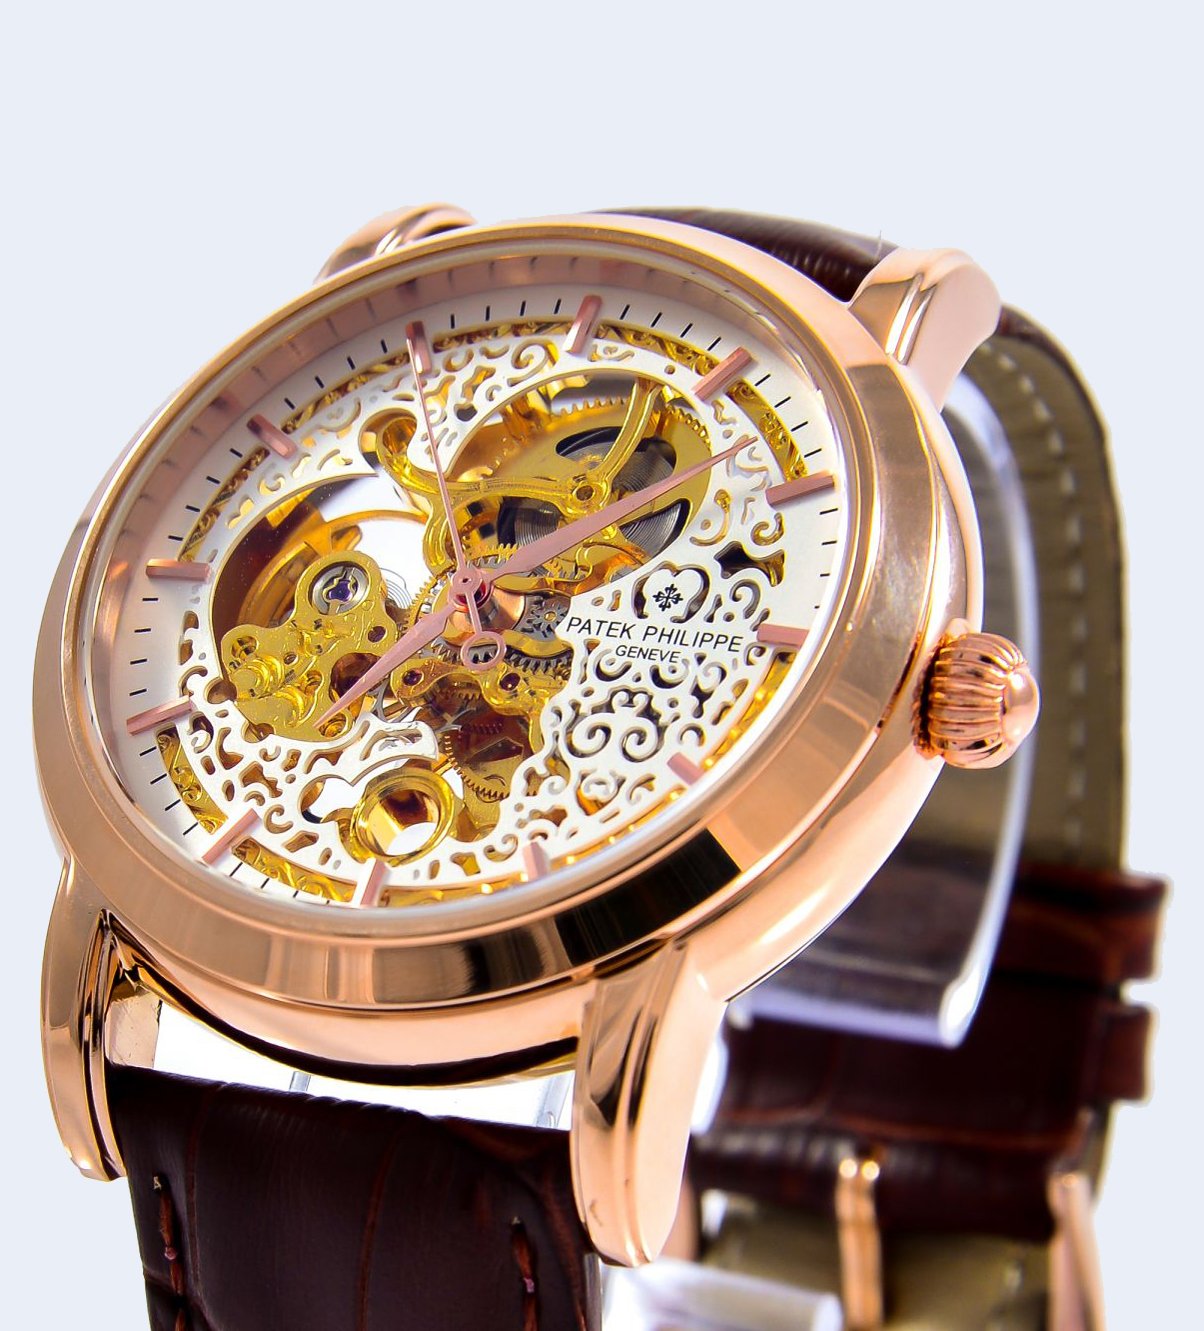 Патек филип цена оригинал. Часы Patek Philippe 58152. Часы Patek Philippe Geneve 58152. Золотые часы Patek Philippe Geneve 58152. Patek Philippe Geneve часы мужские.